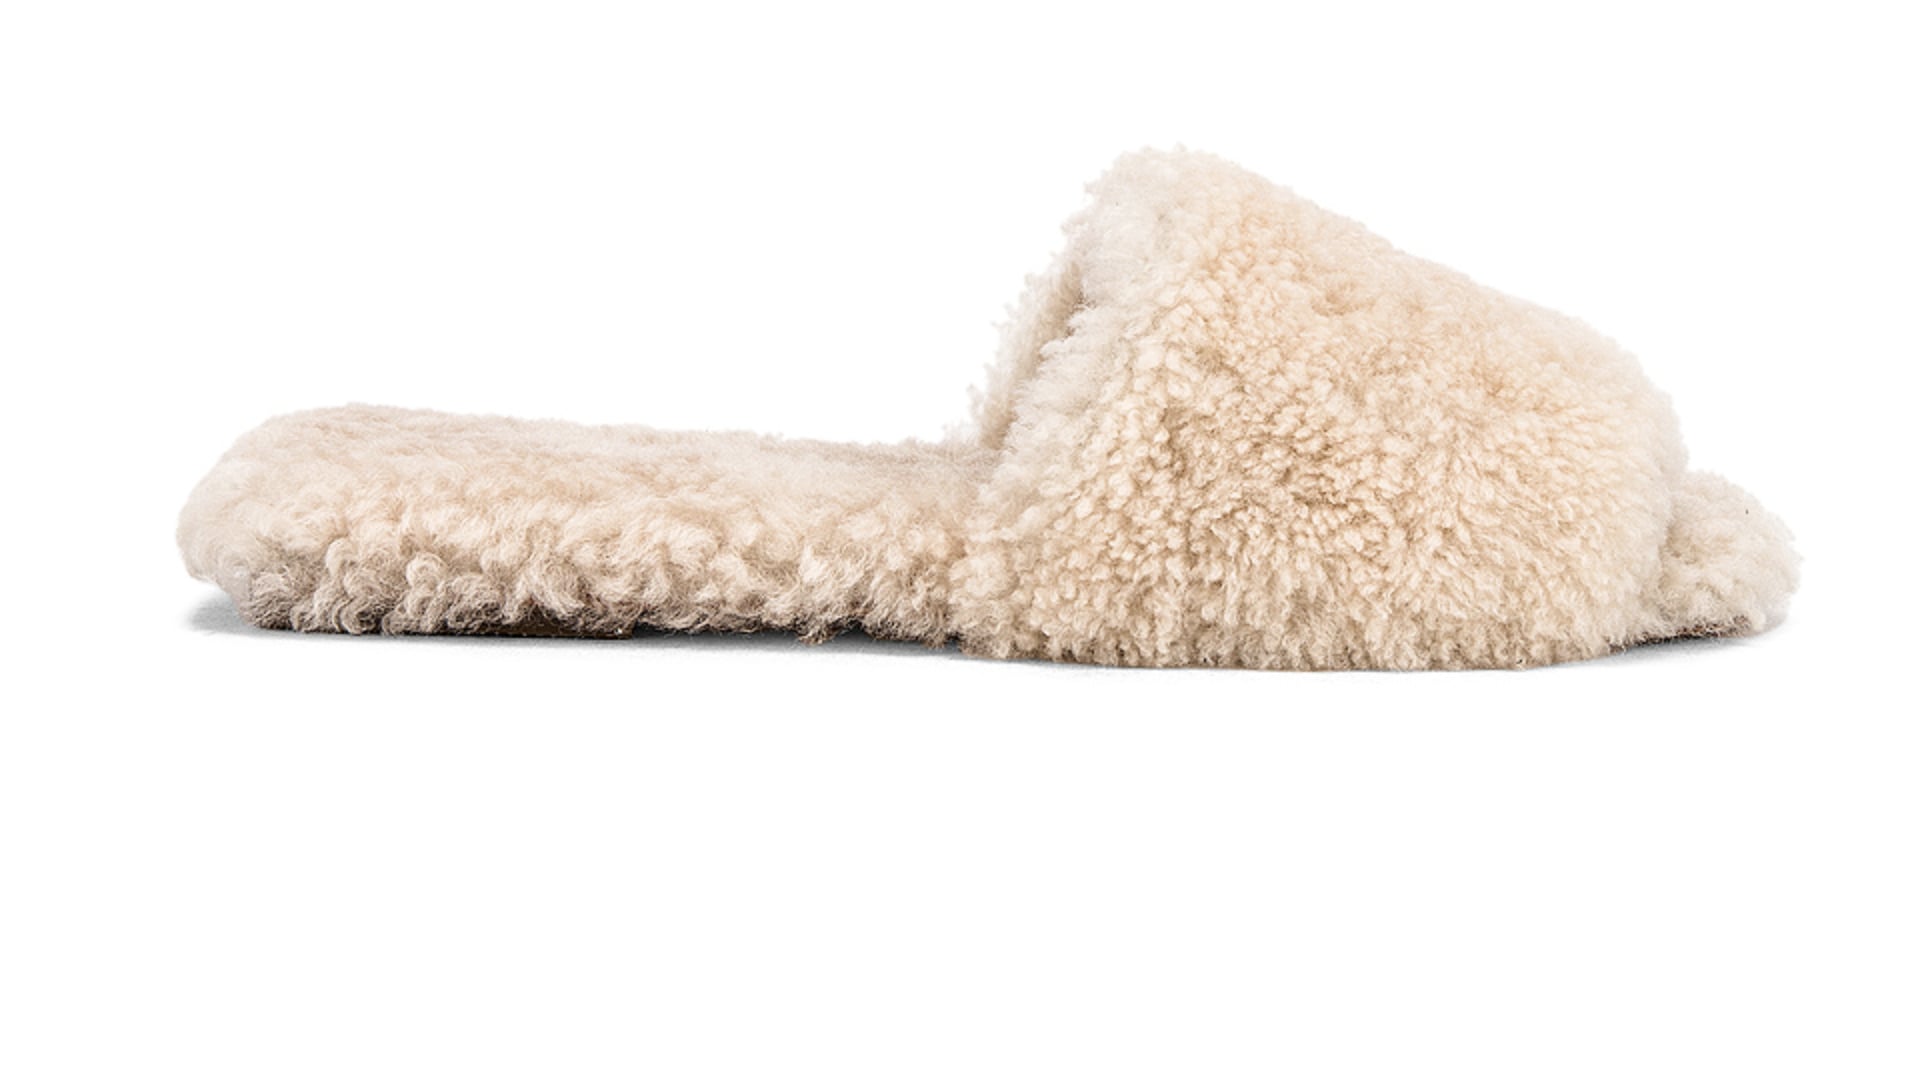 Hailey Bieber Wears $1,070 White Furry Prada Slippers